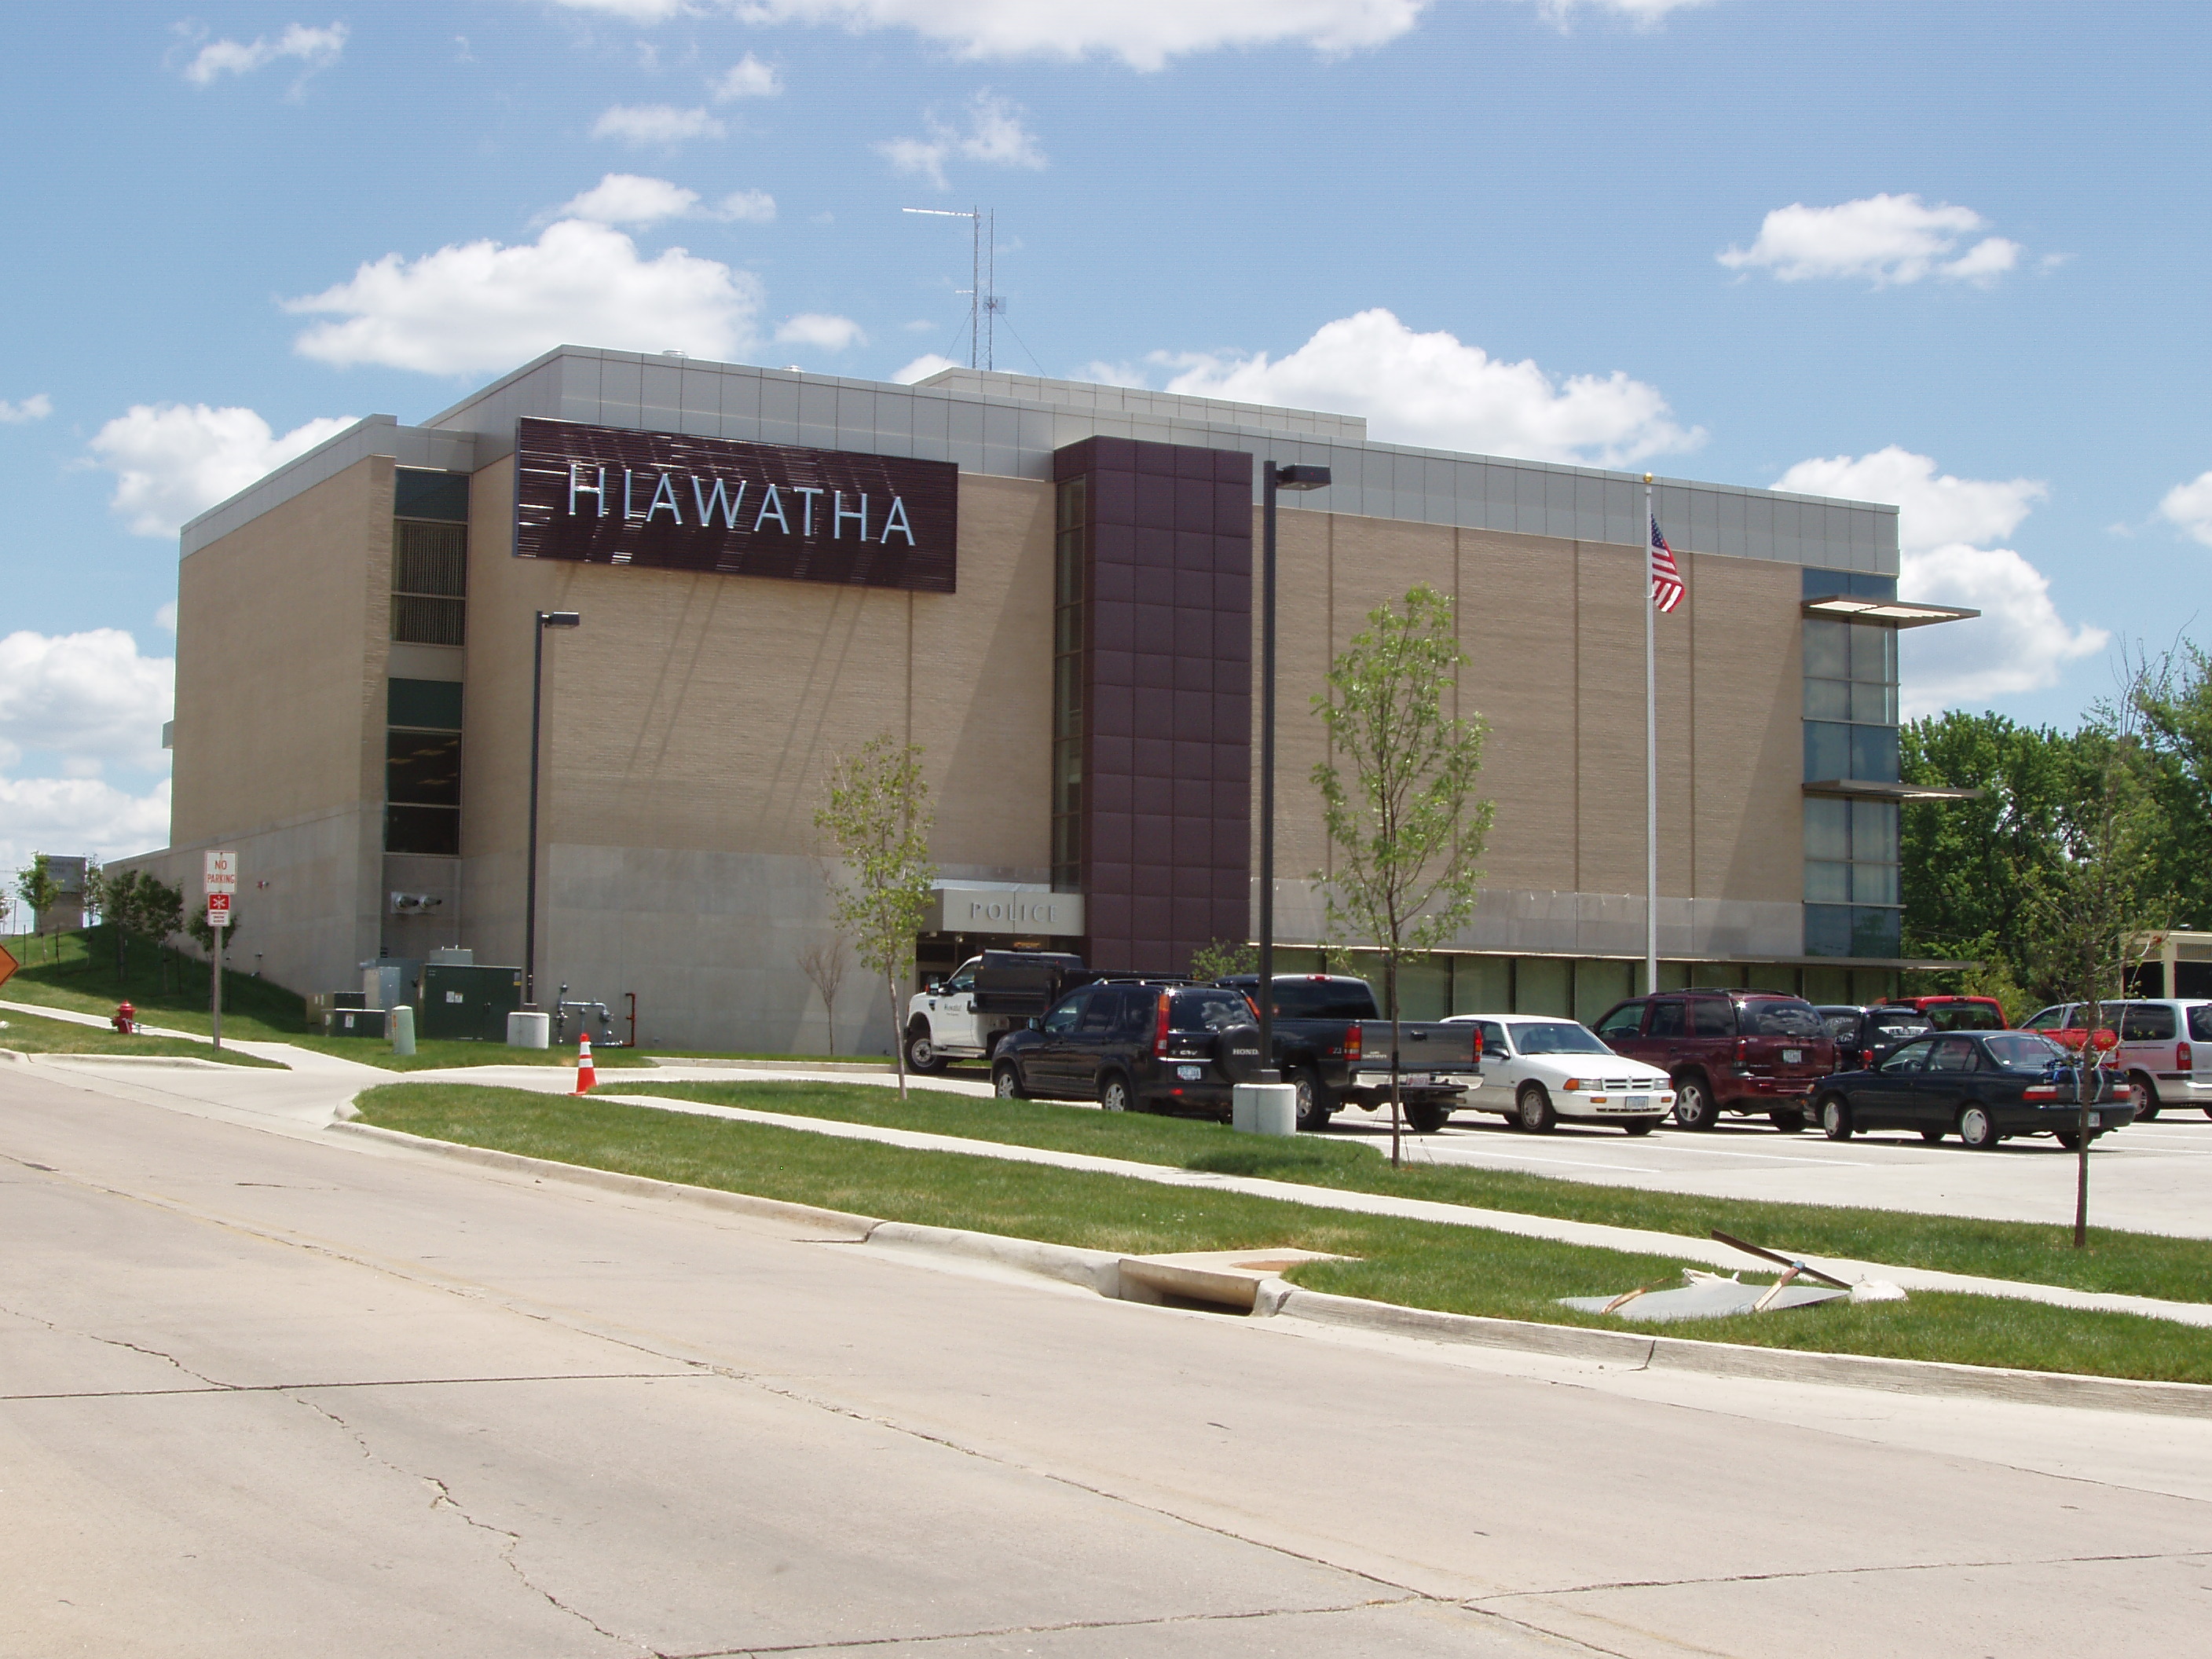 Hiawatha City Hall (Hiawatha)